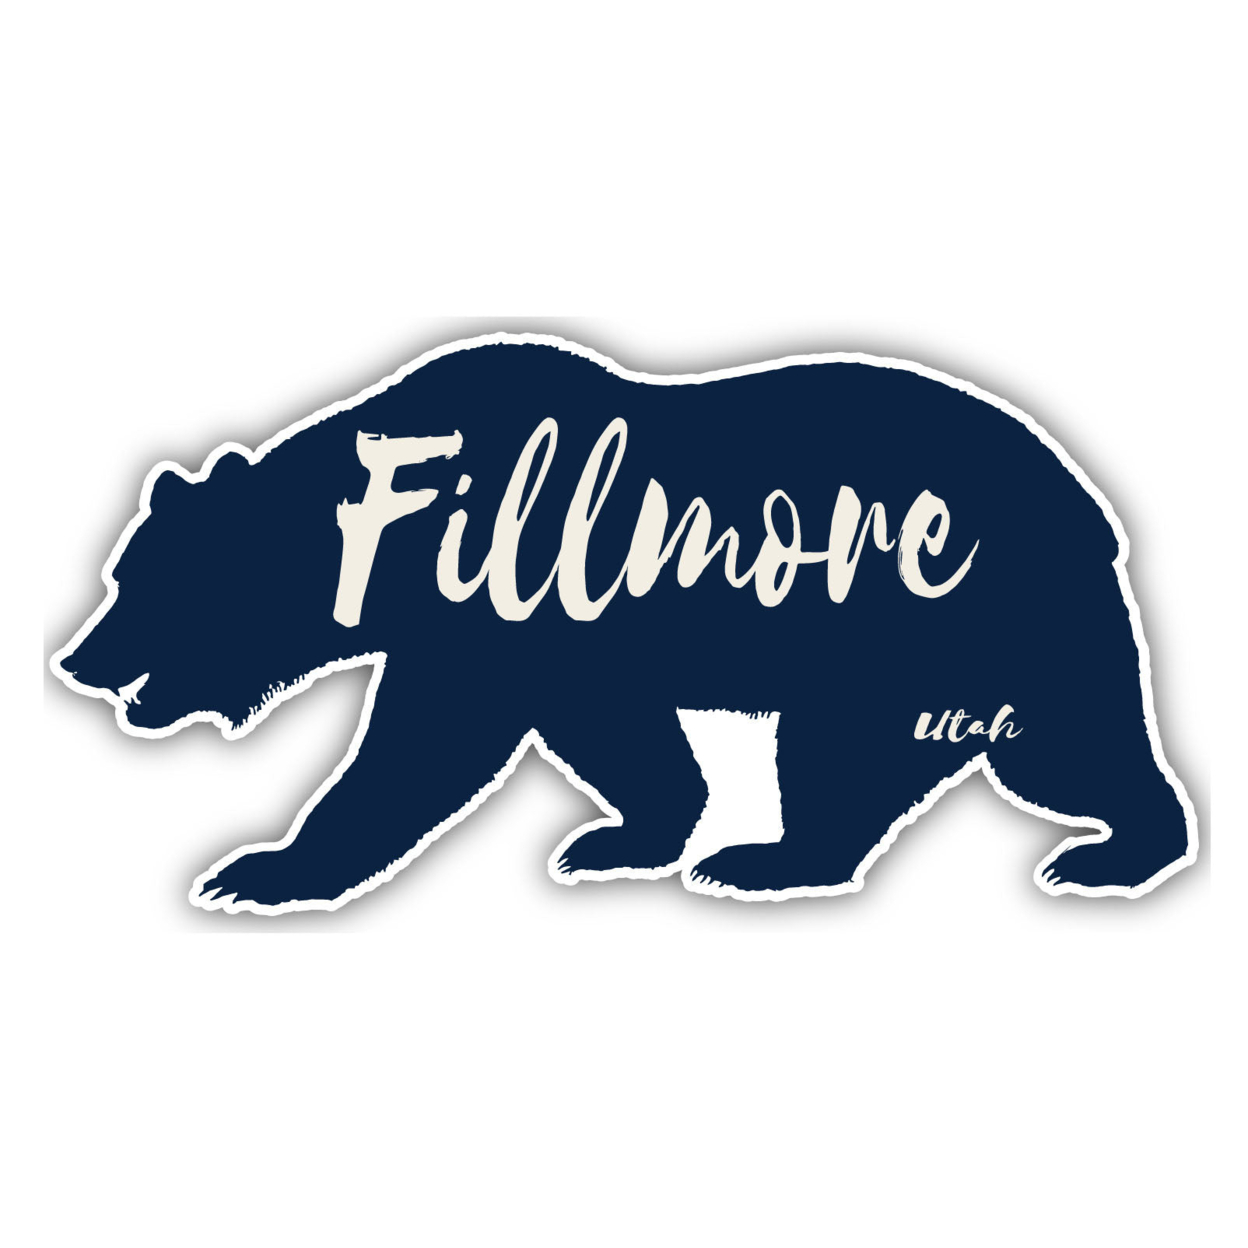 Fillmore Utah Souvenir Decorative Stickers (Choose Theme And Size) - Single Unit, 10-Inch, Bear